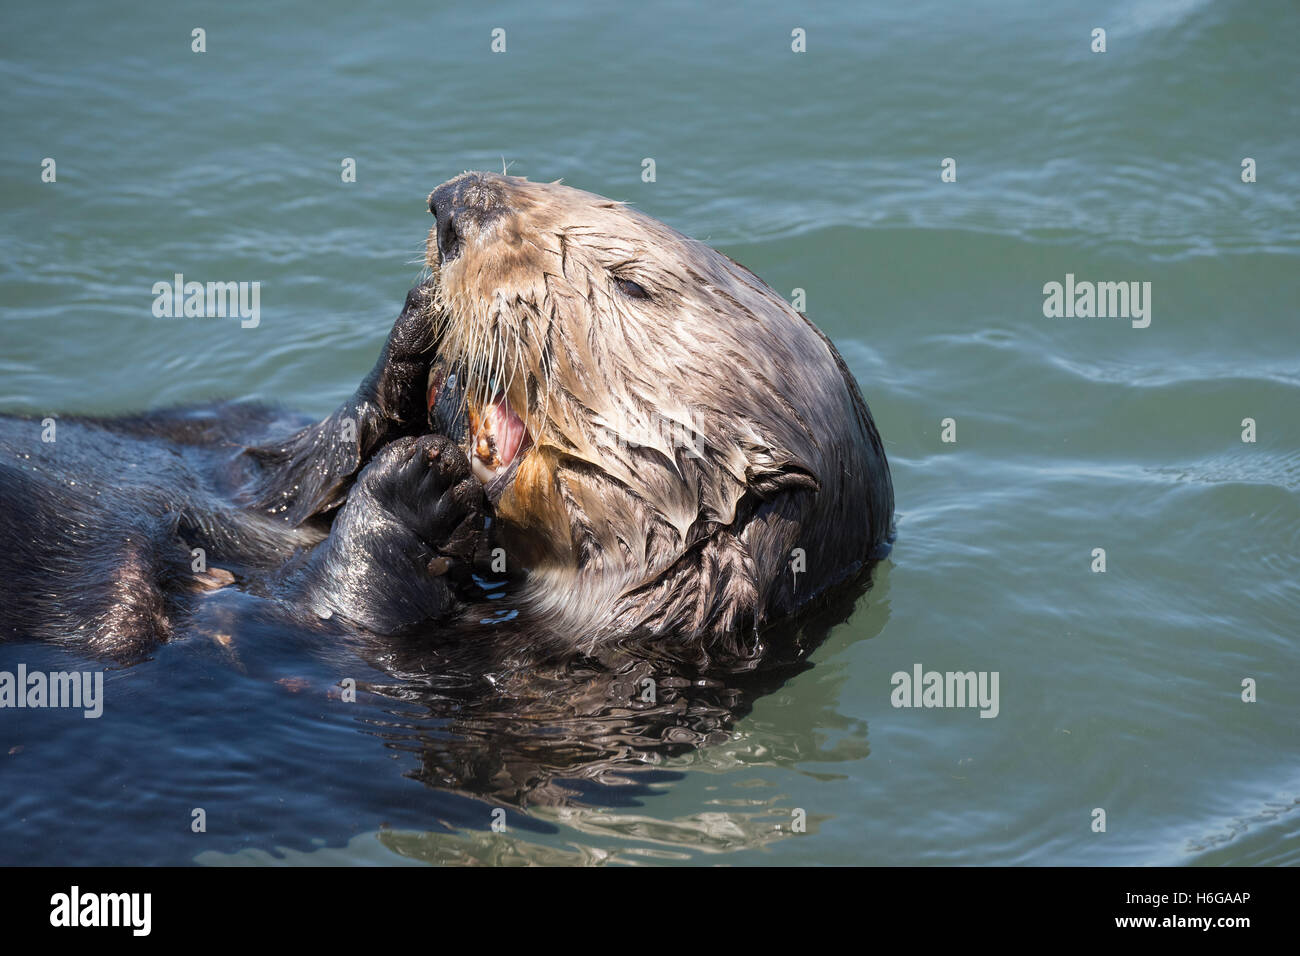 California Sea Otter, Enhydra lutris nereis, mangiare una cozza, Elkhorn Slough, Moss Landing, CALIFORNIA, STATI UNITI D'AMERICA Foto Stock